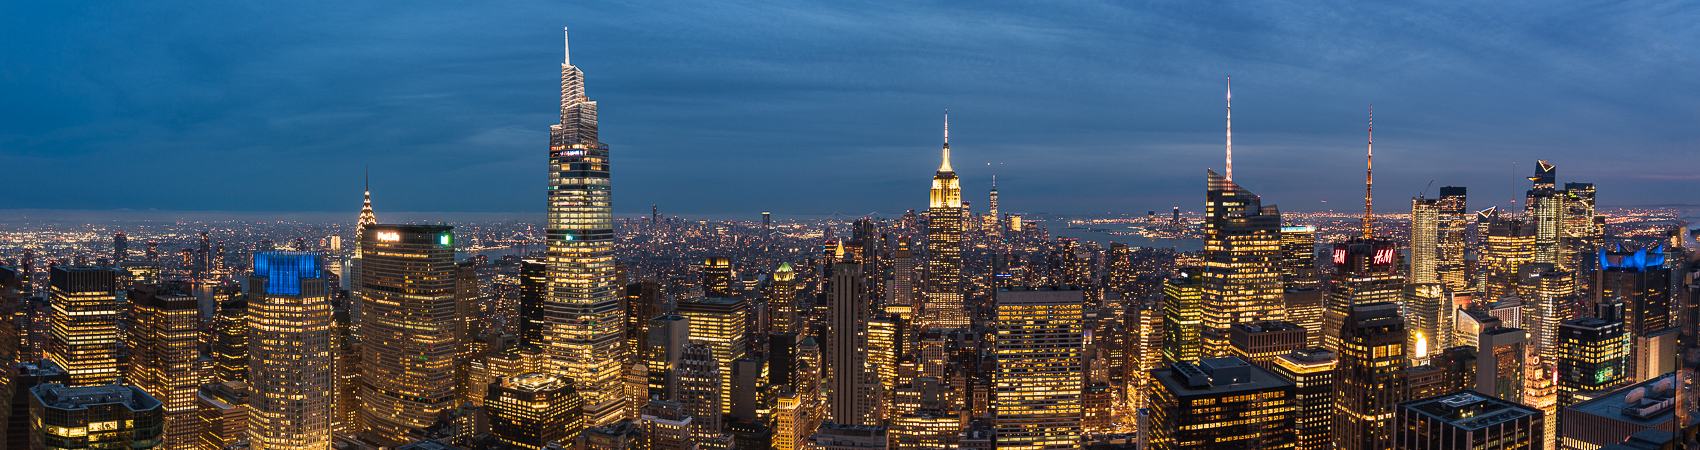 Viaje fotográfico a Nueva York: Descubre Manhattan